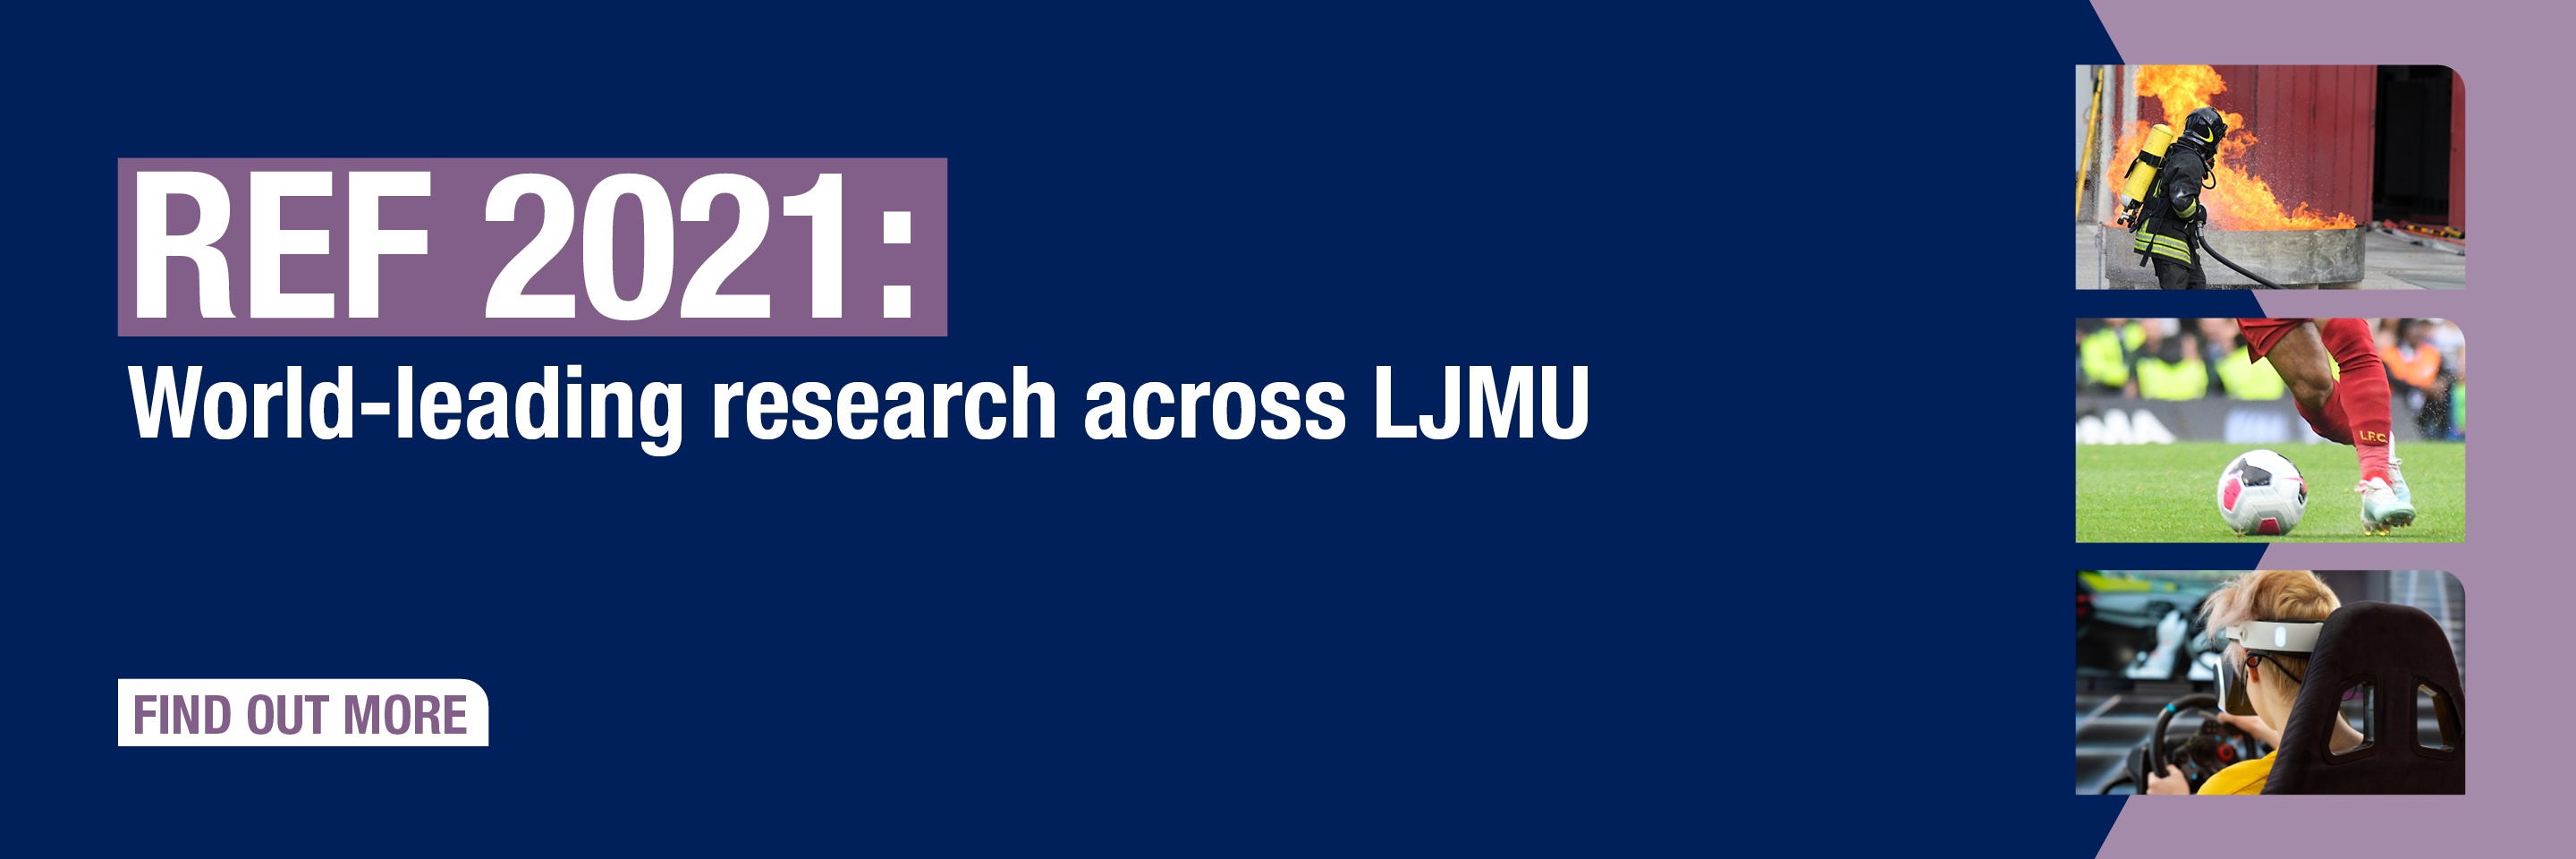 REF 2021: World-leading research across LJMU